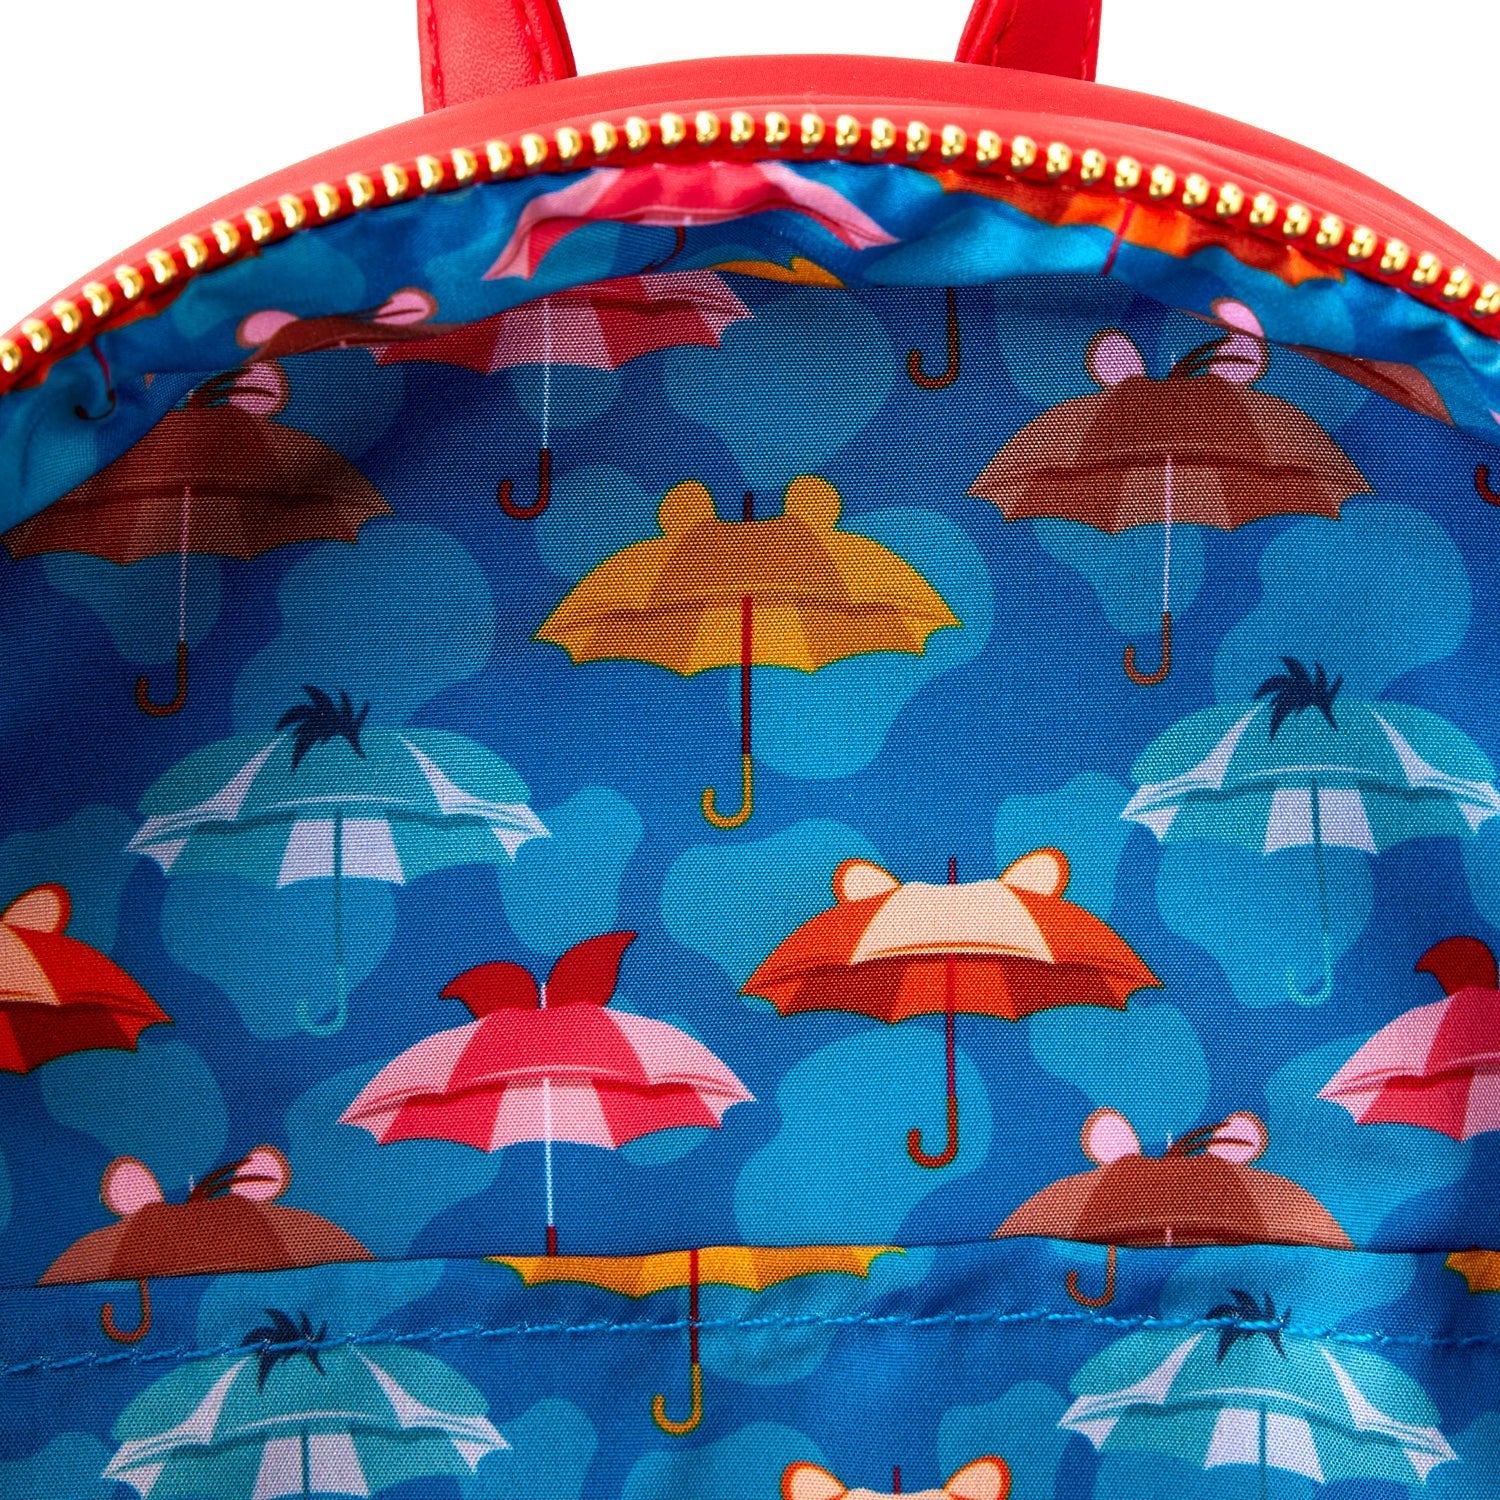 Loungefly x Disney Winnie the Pooh Puffer Jacket Cosplay Mini Backpack - GeekCore